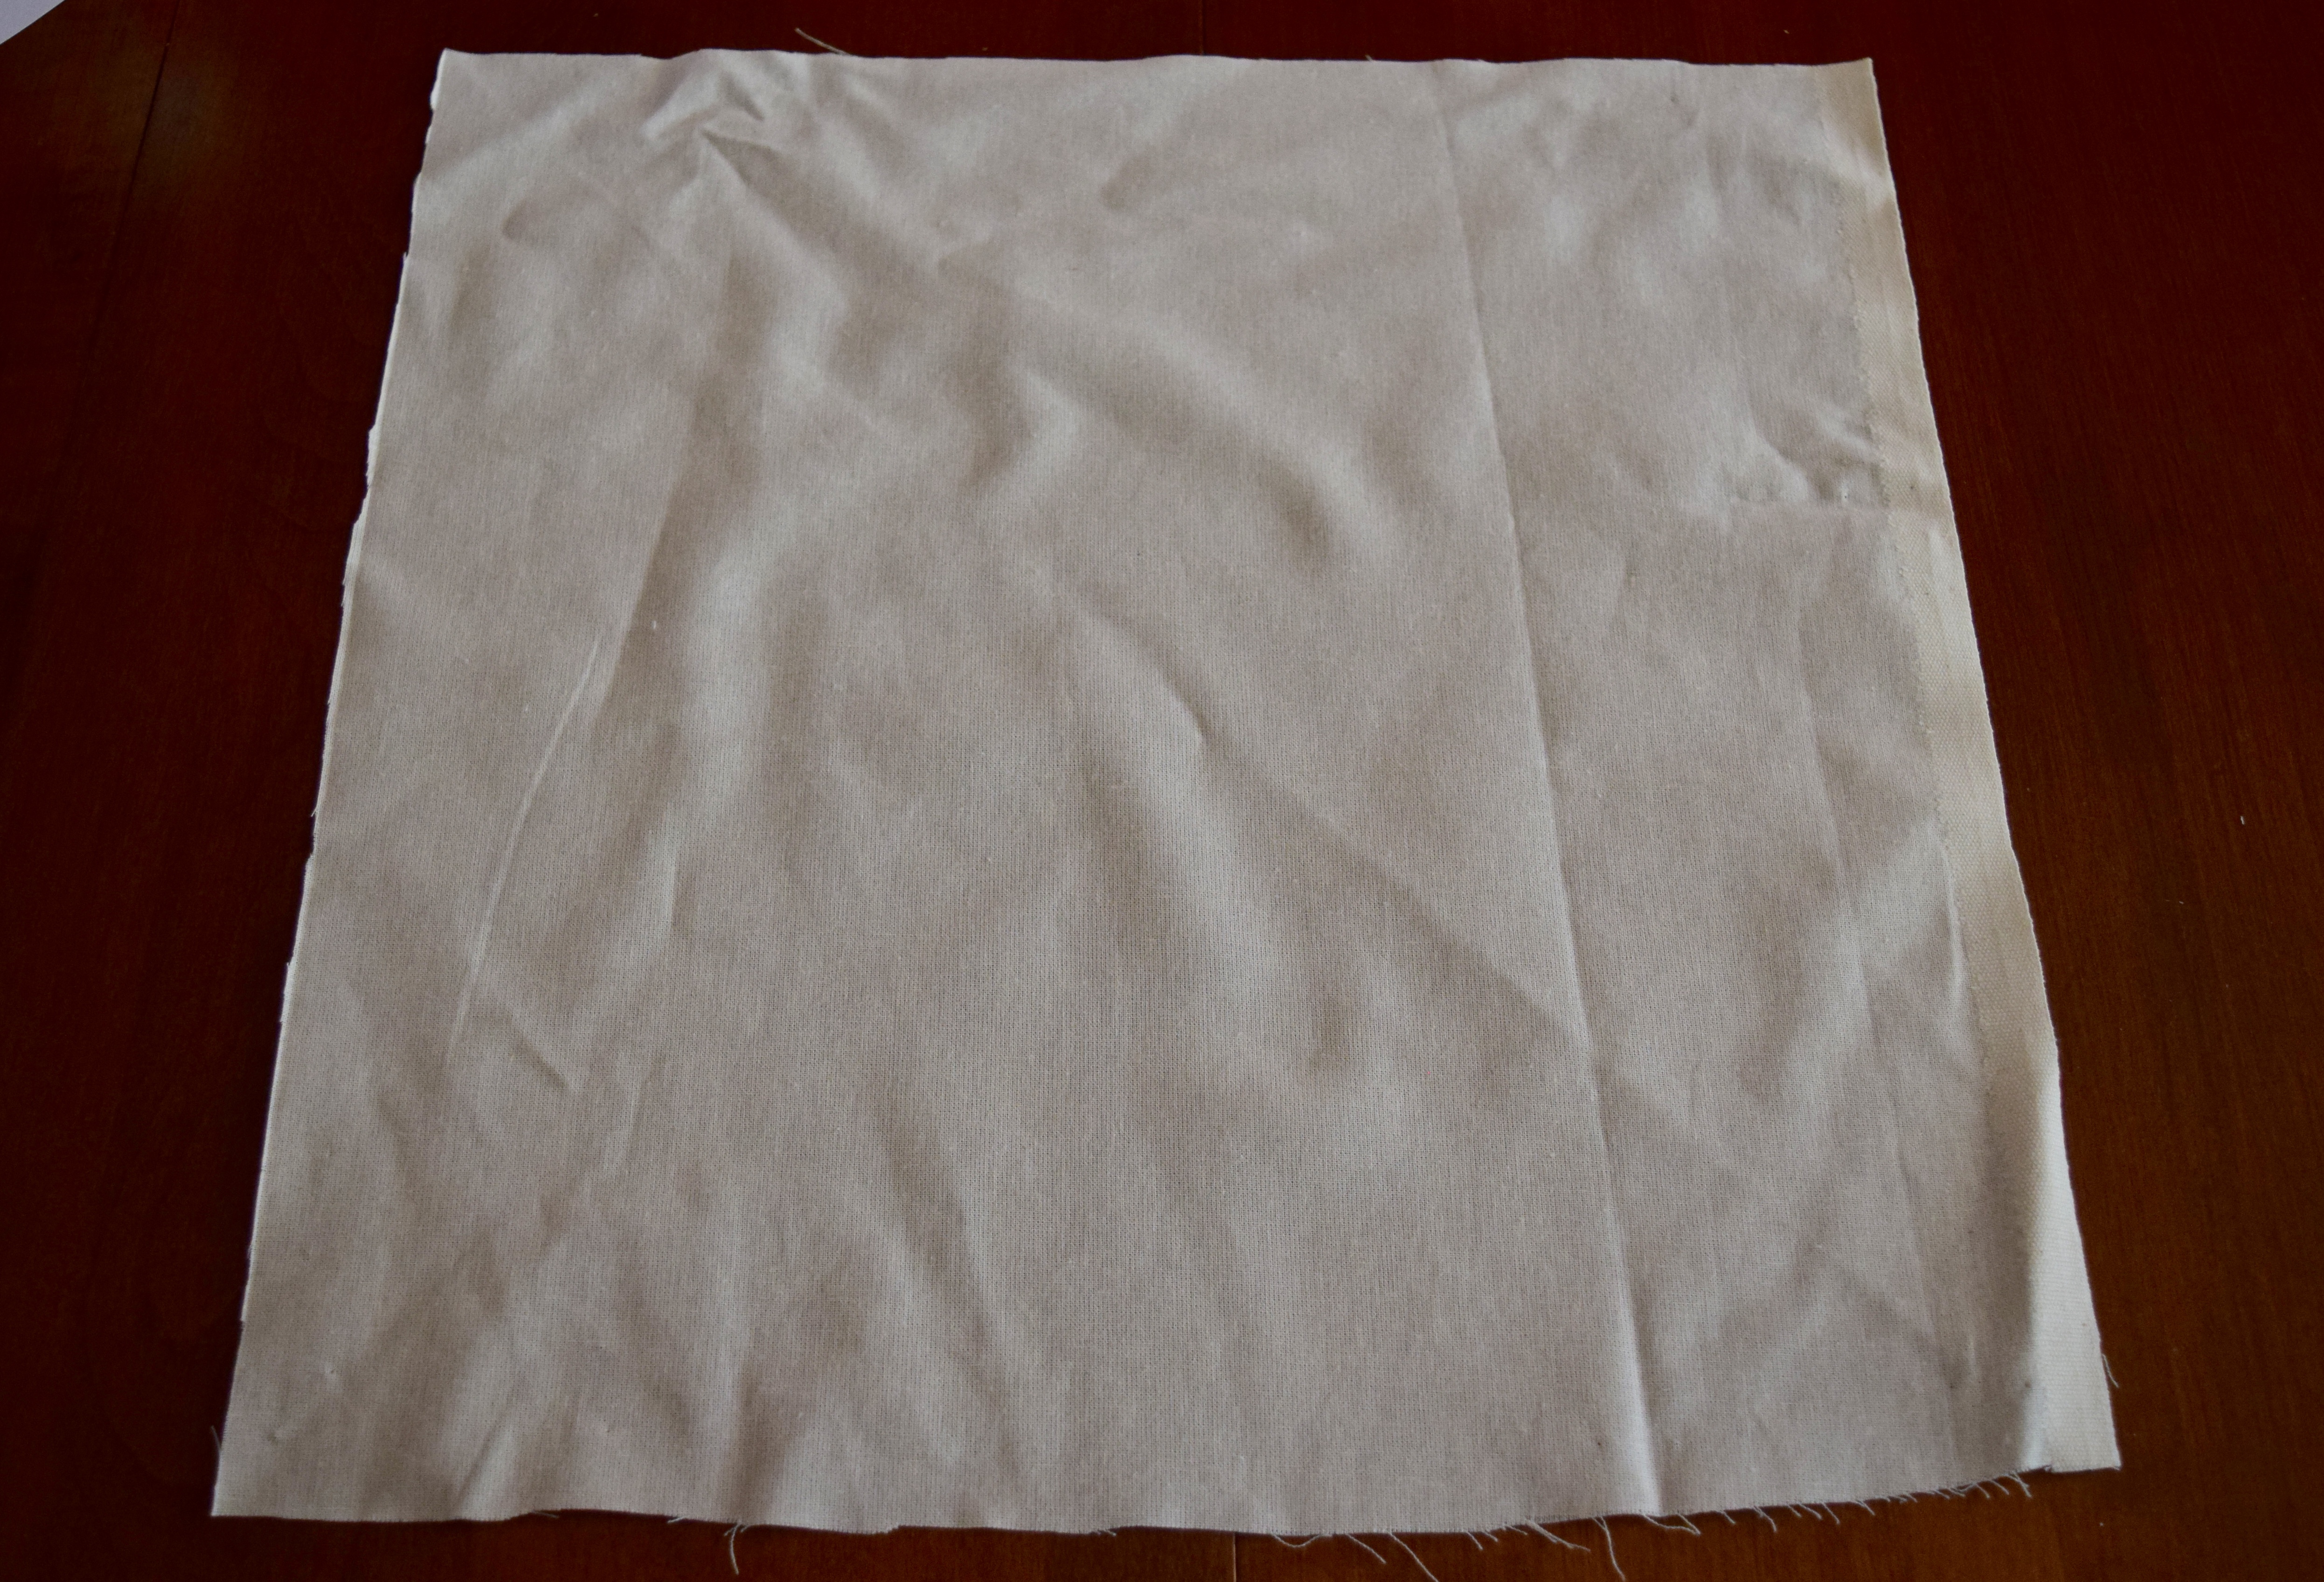 How to sew and block-print napkins | flourishandknot.com